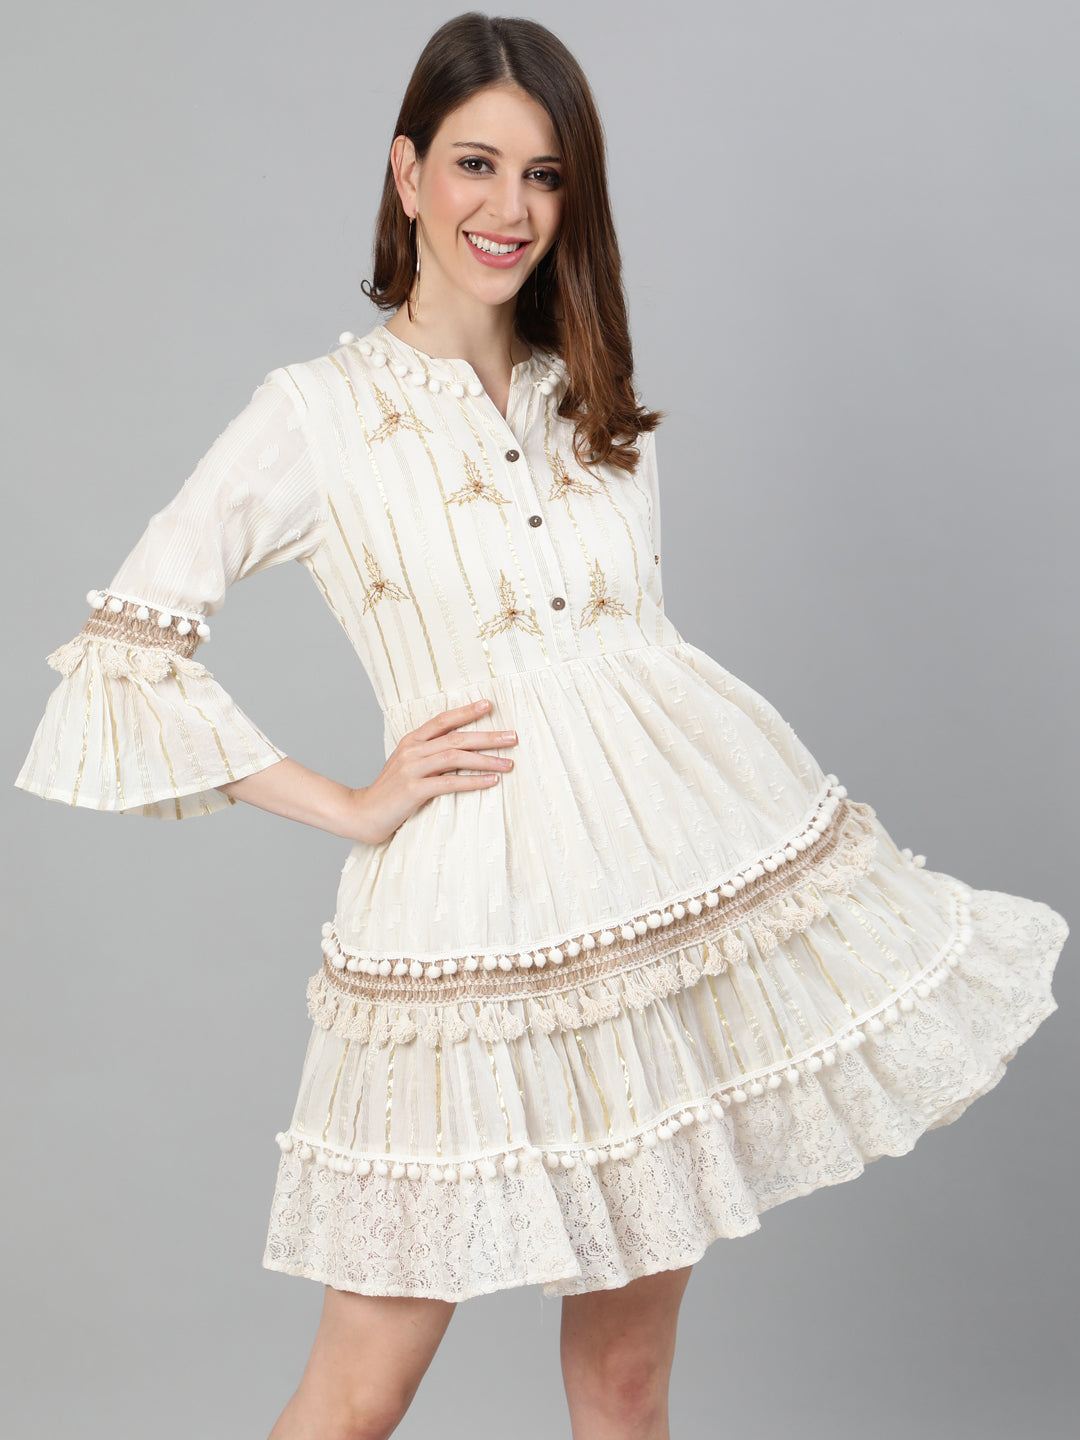 Ishin Women's Cotton Off White Lurex Embroidered A-Line Dress